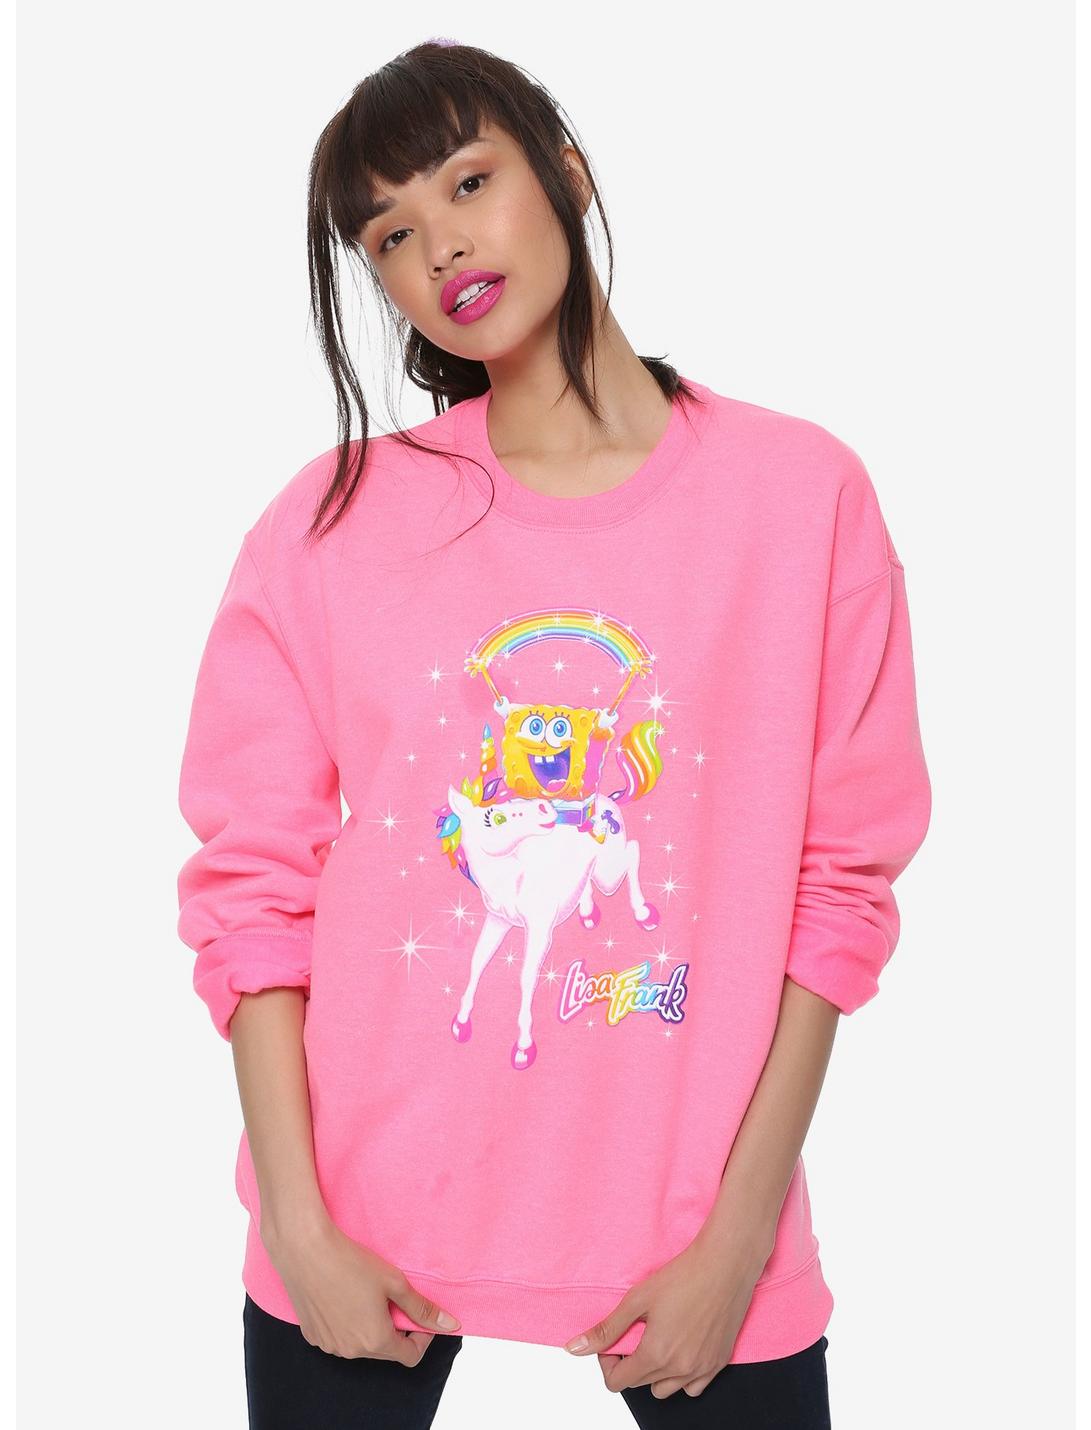 Lisa Frank X SpongeBob SquarePants Unicorn Girls Sweatshirt Hot Topic Exclusive, PINK, hi-res